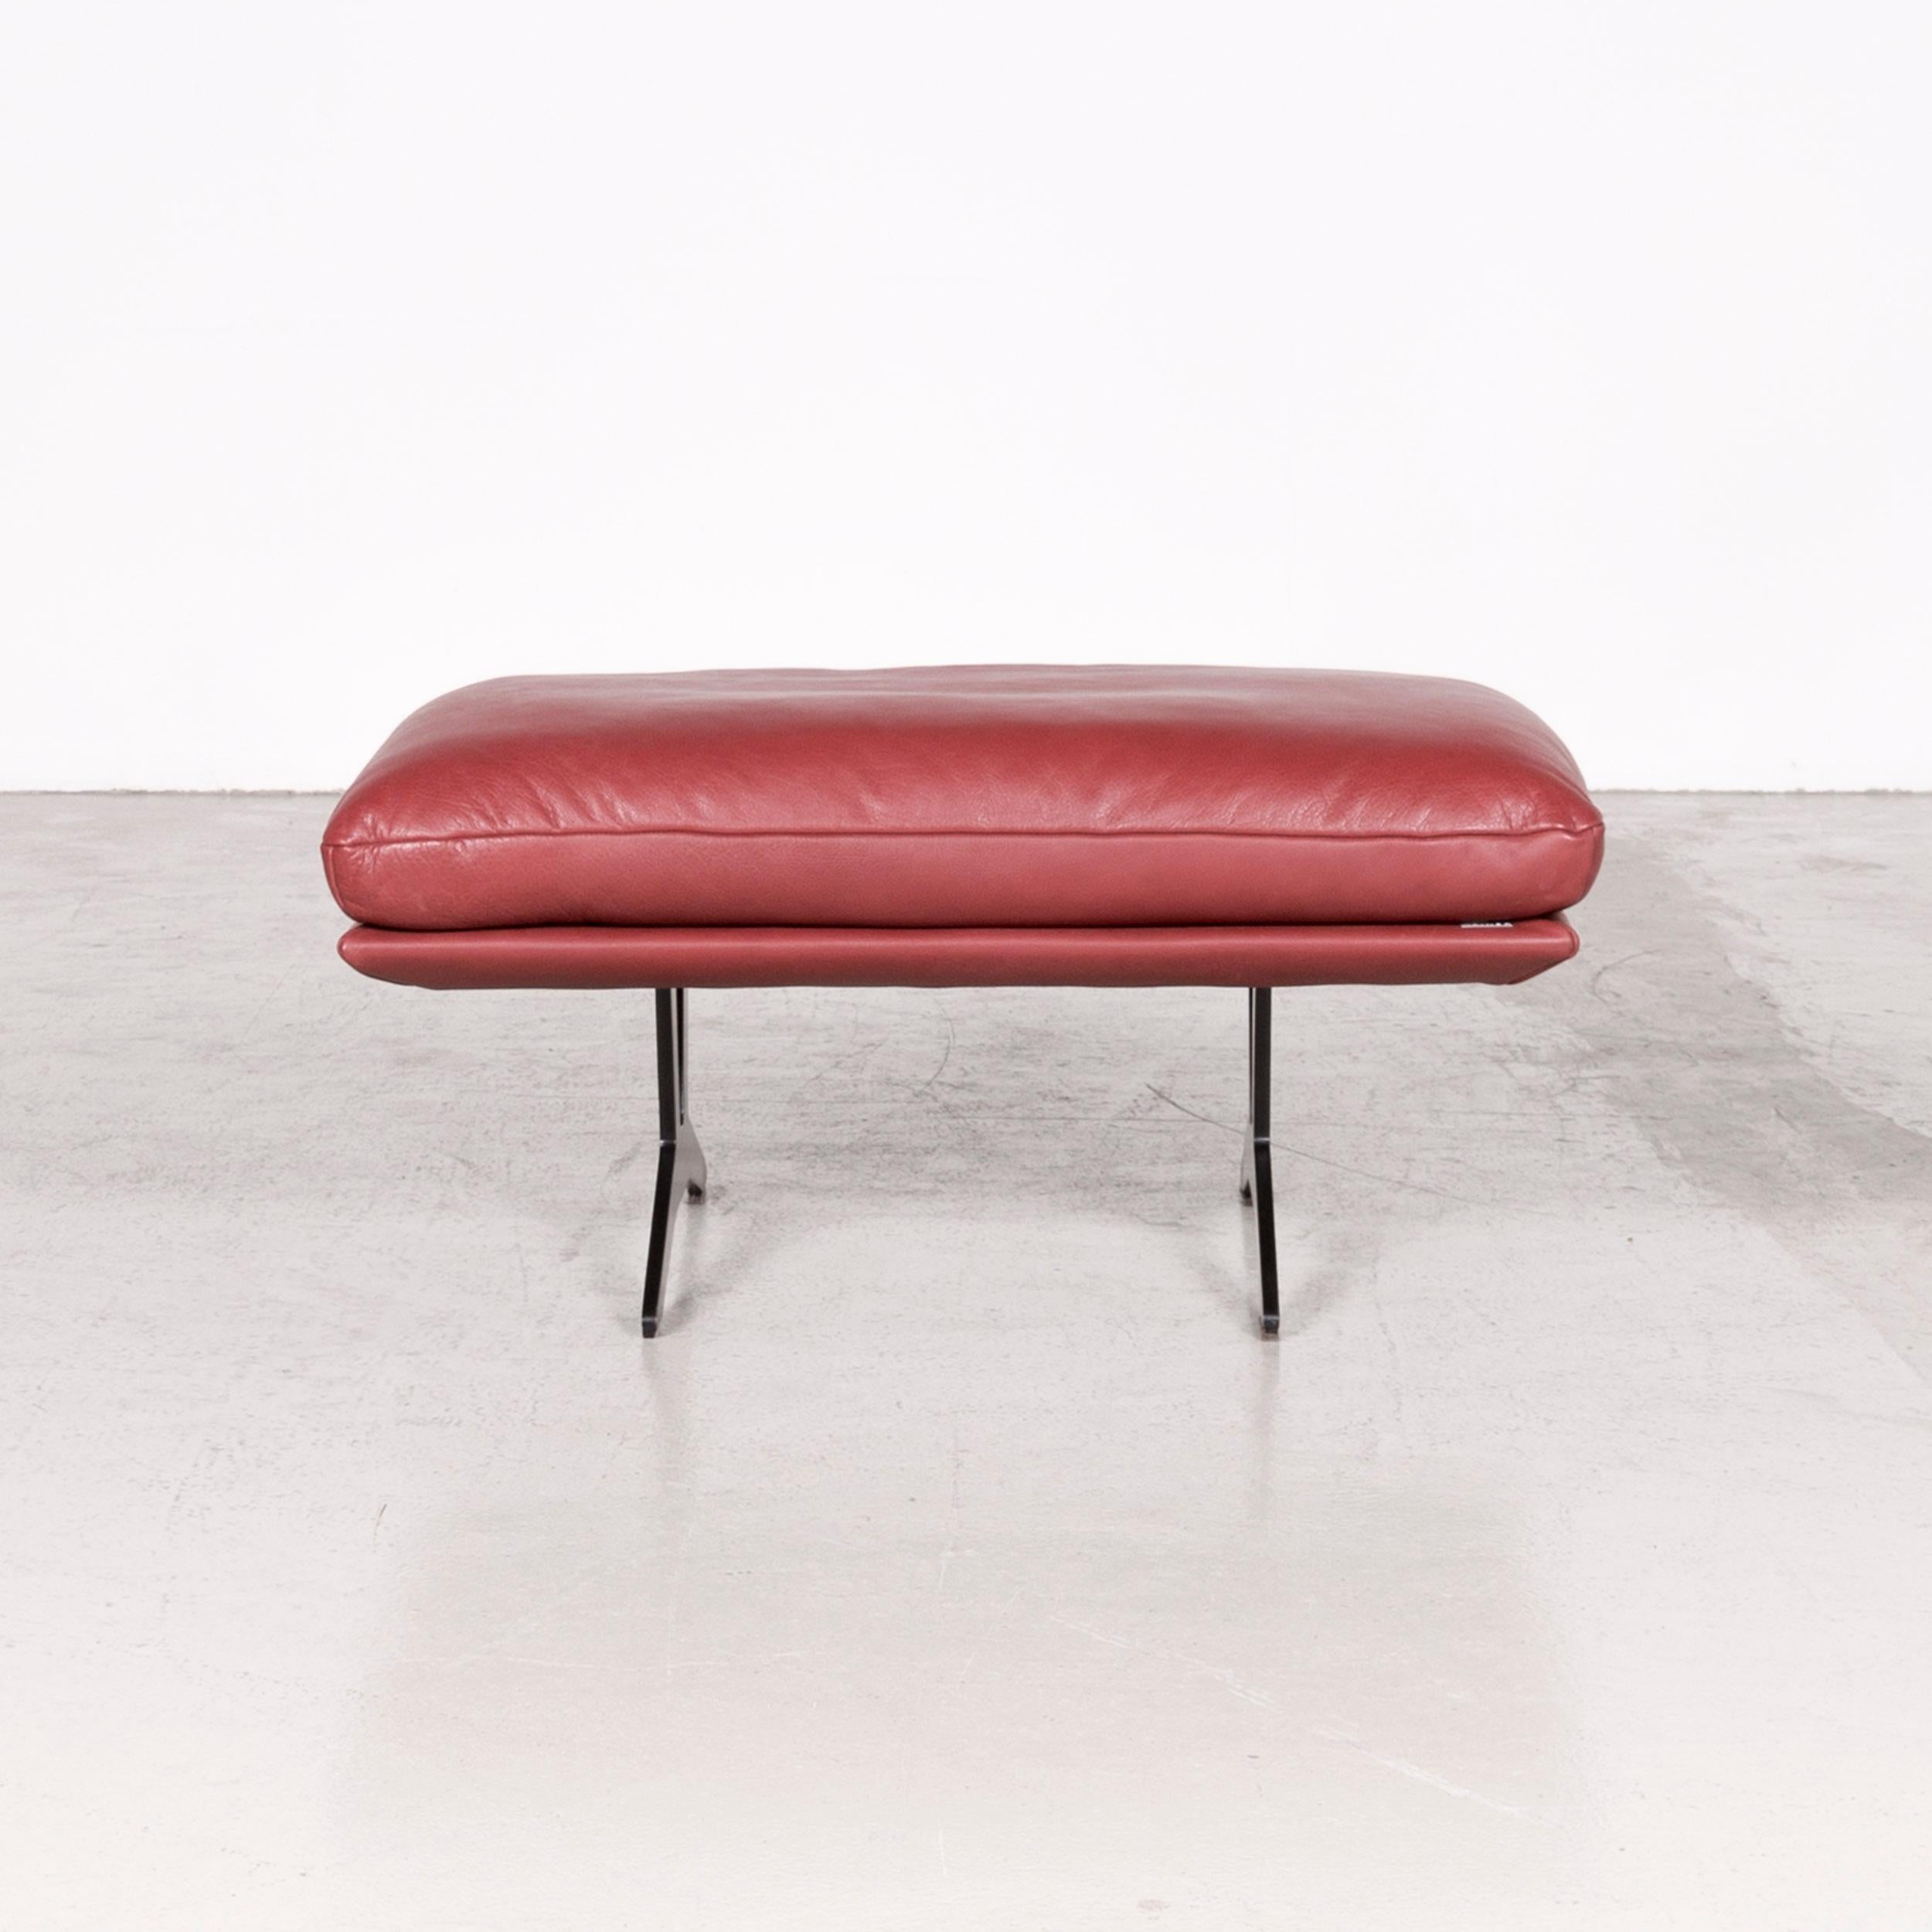 German Koinor Francis Designer Leather Footstool Red